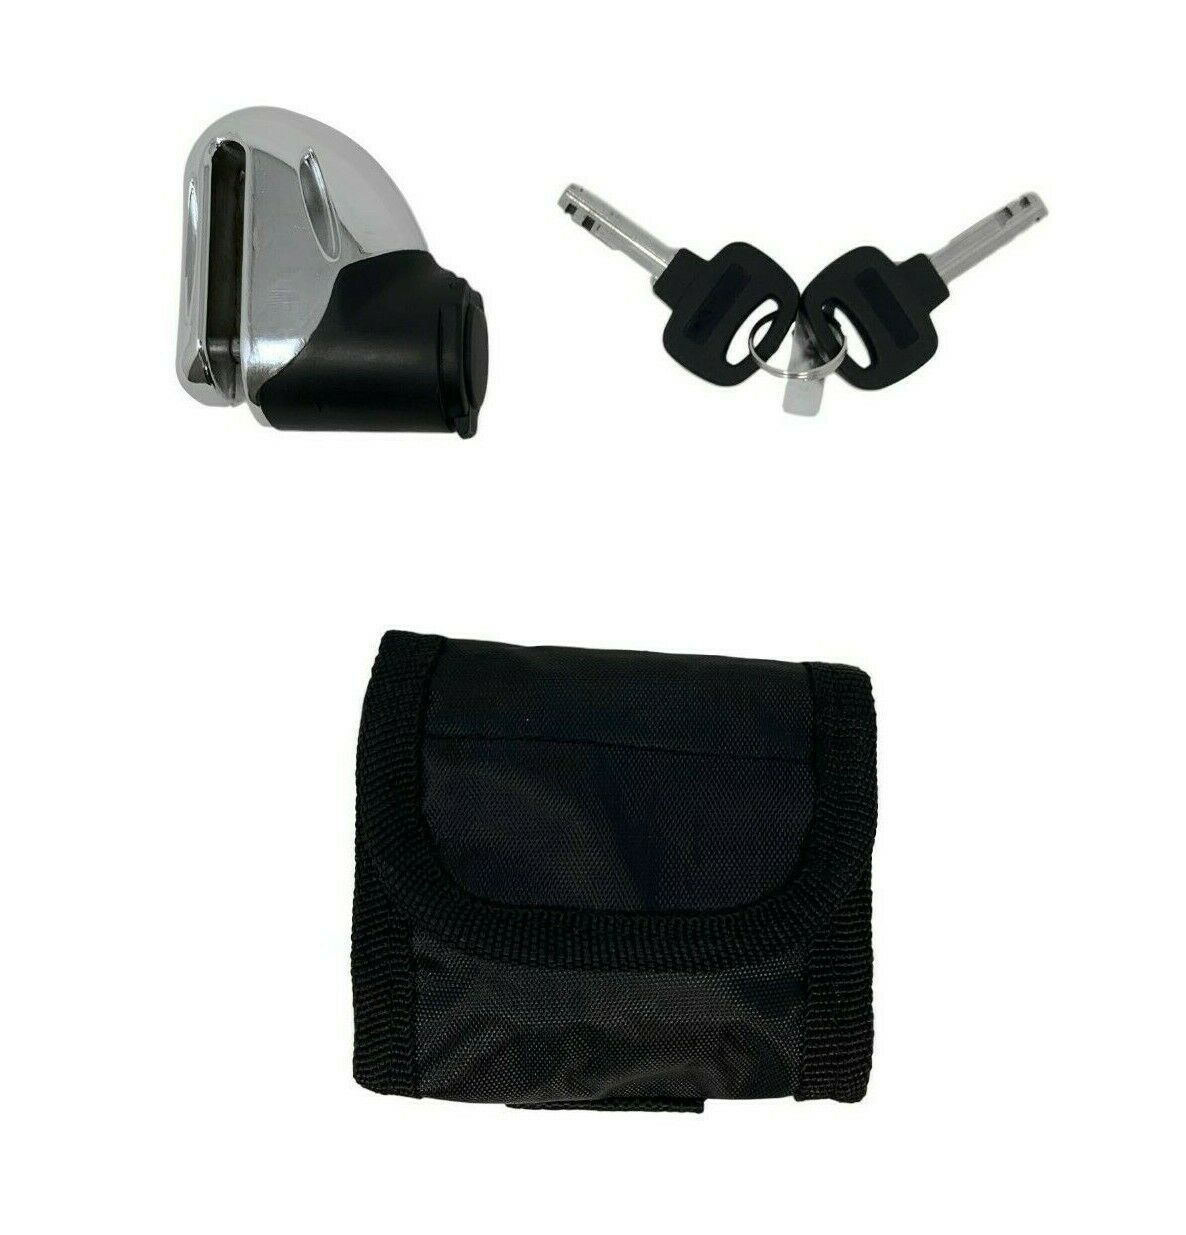 Areo Moped / Motorbike Heavy Duty Disc Lock With Pouch - 2 Keys - 5.5mm Pin - Sportandleisure.com (6968030134426)